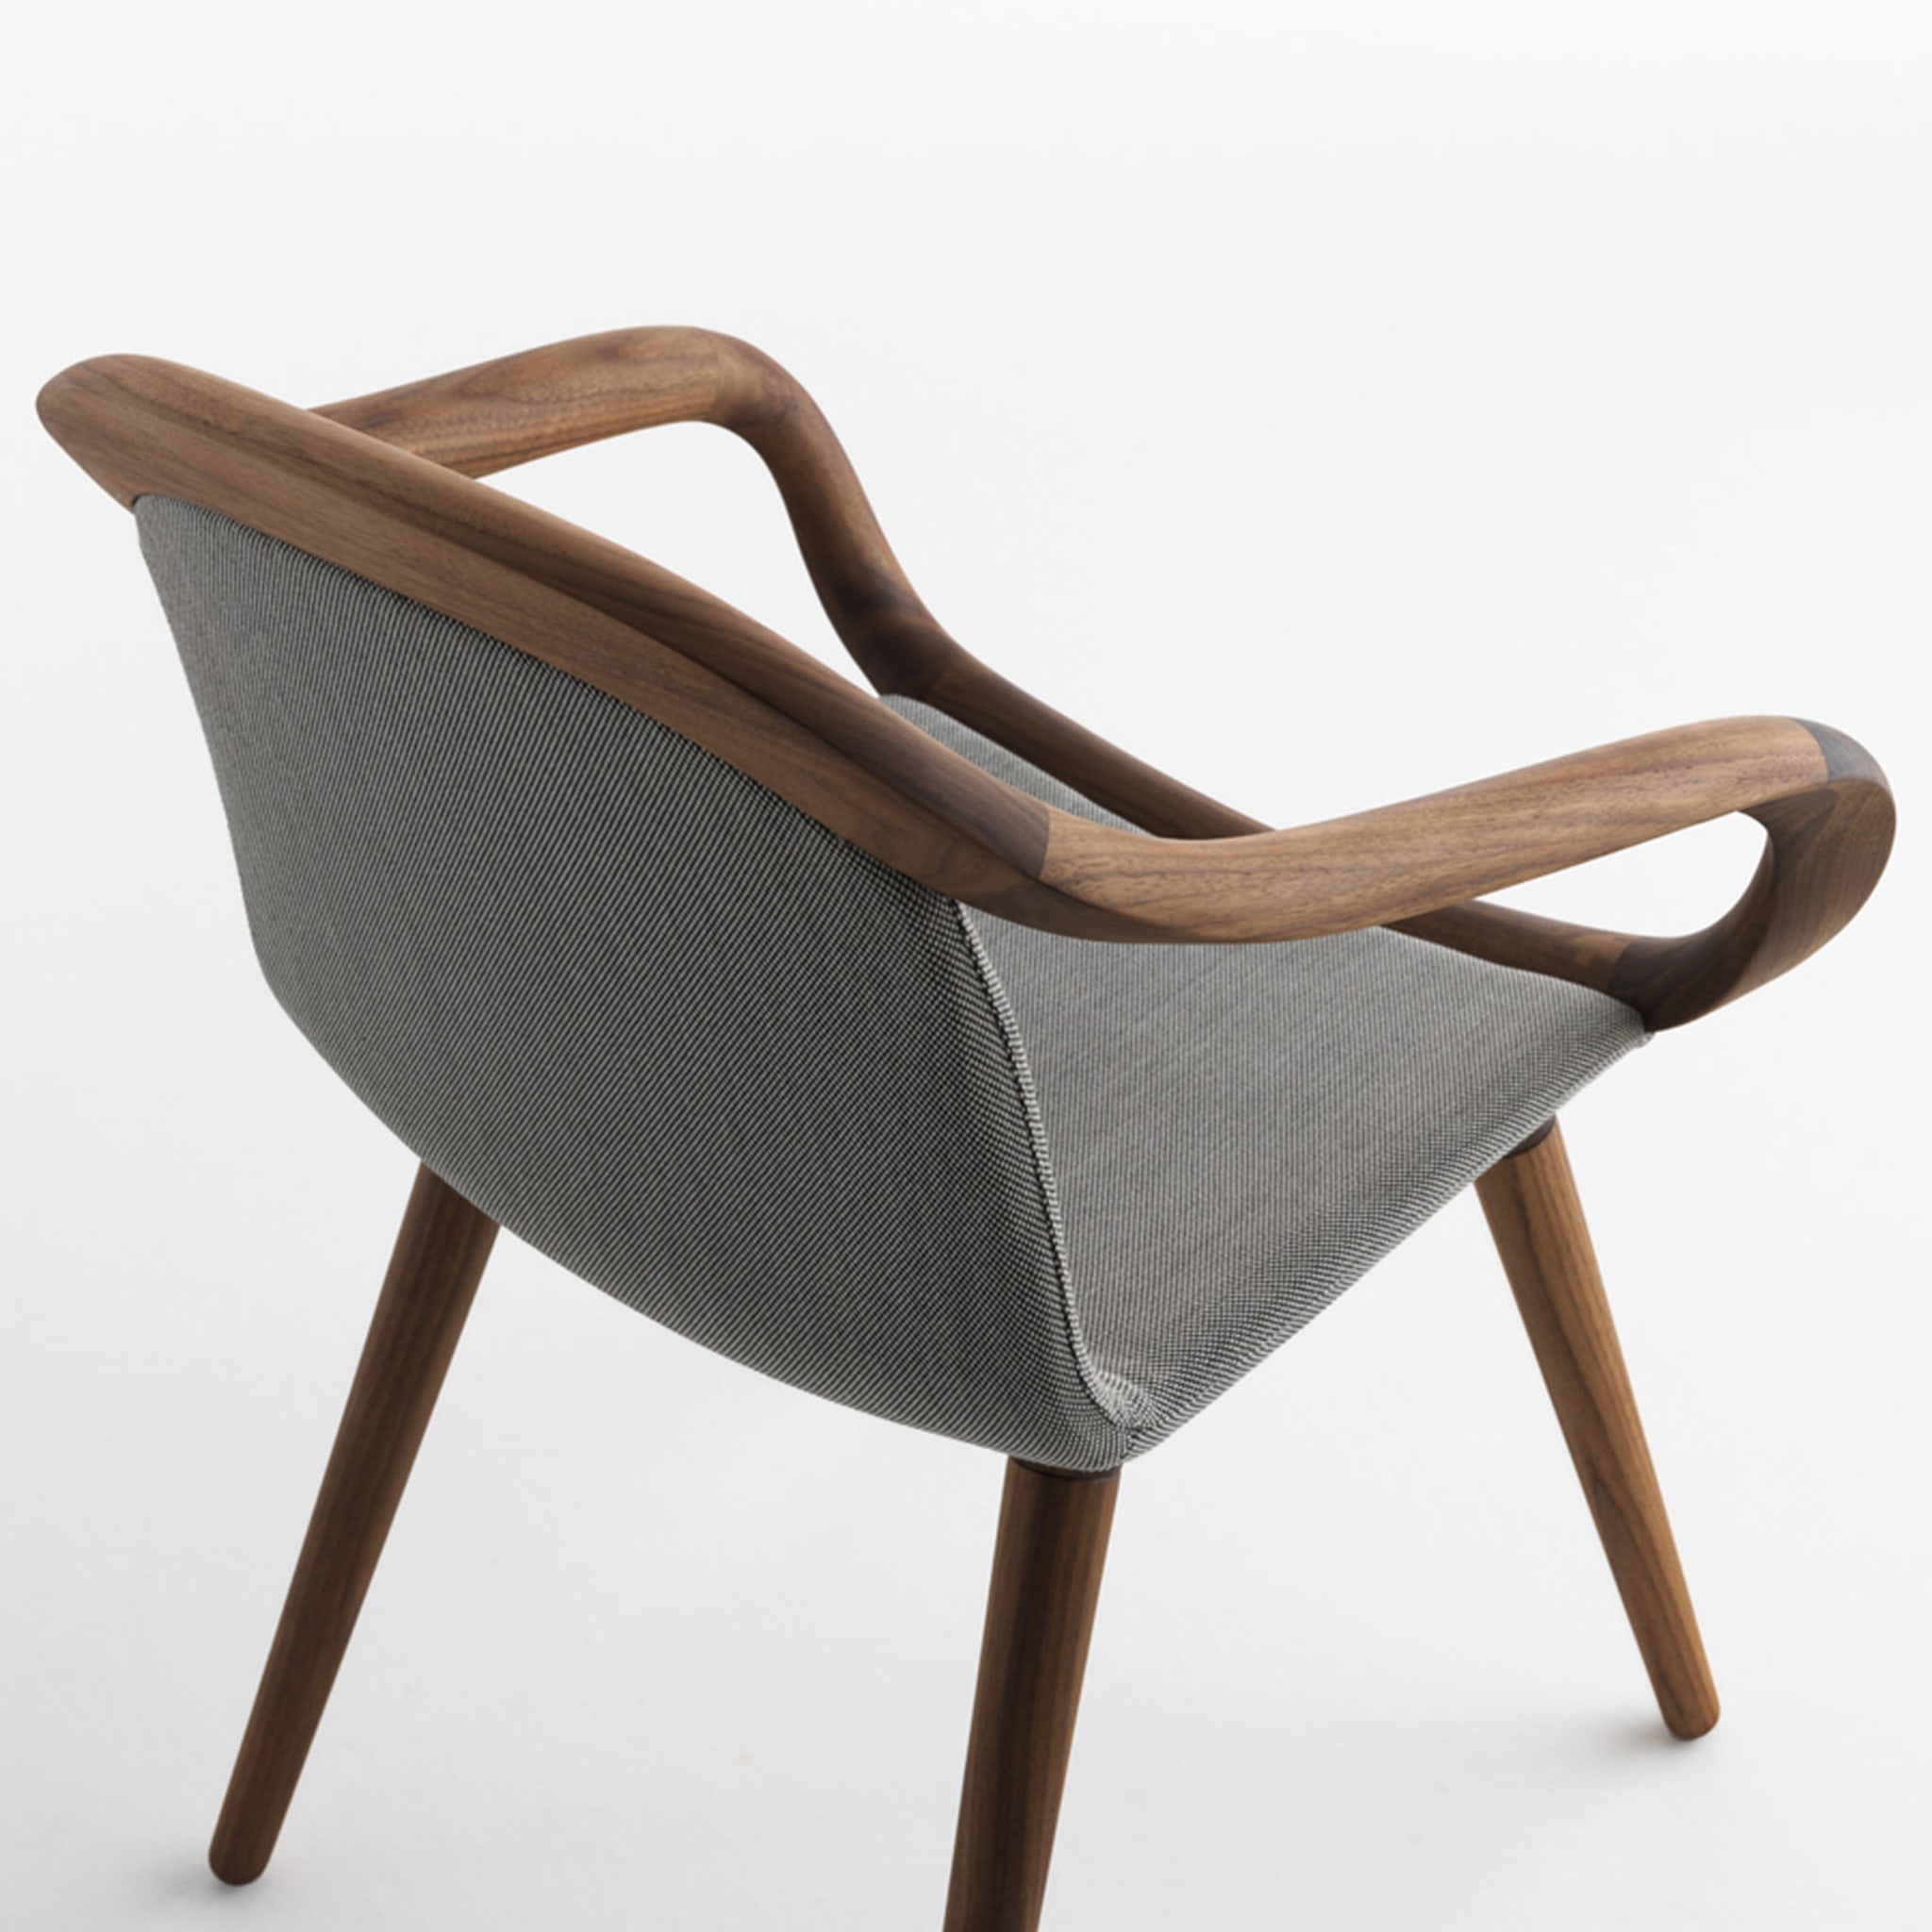 Ginevra Chair by Studio Balutto - Alternative view 4